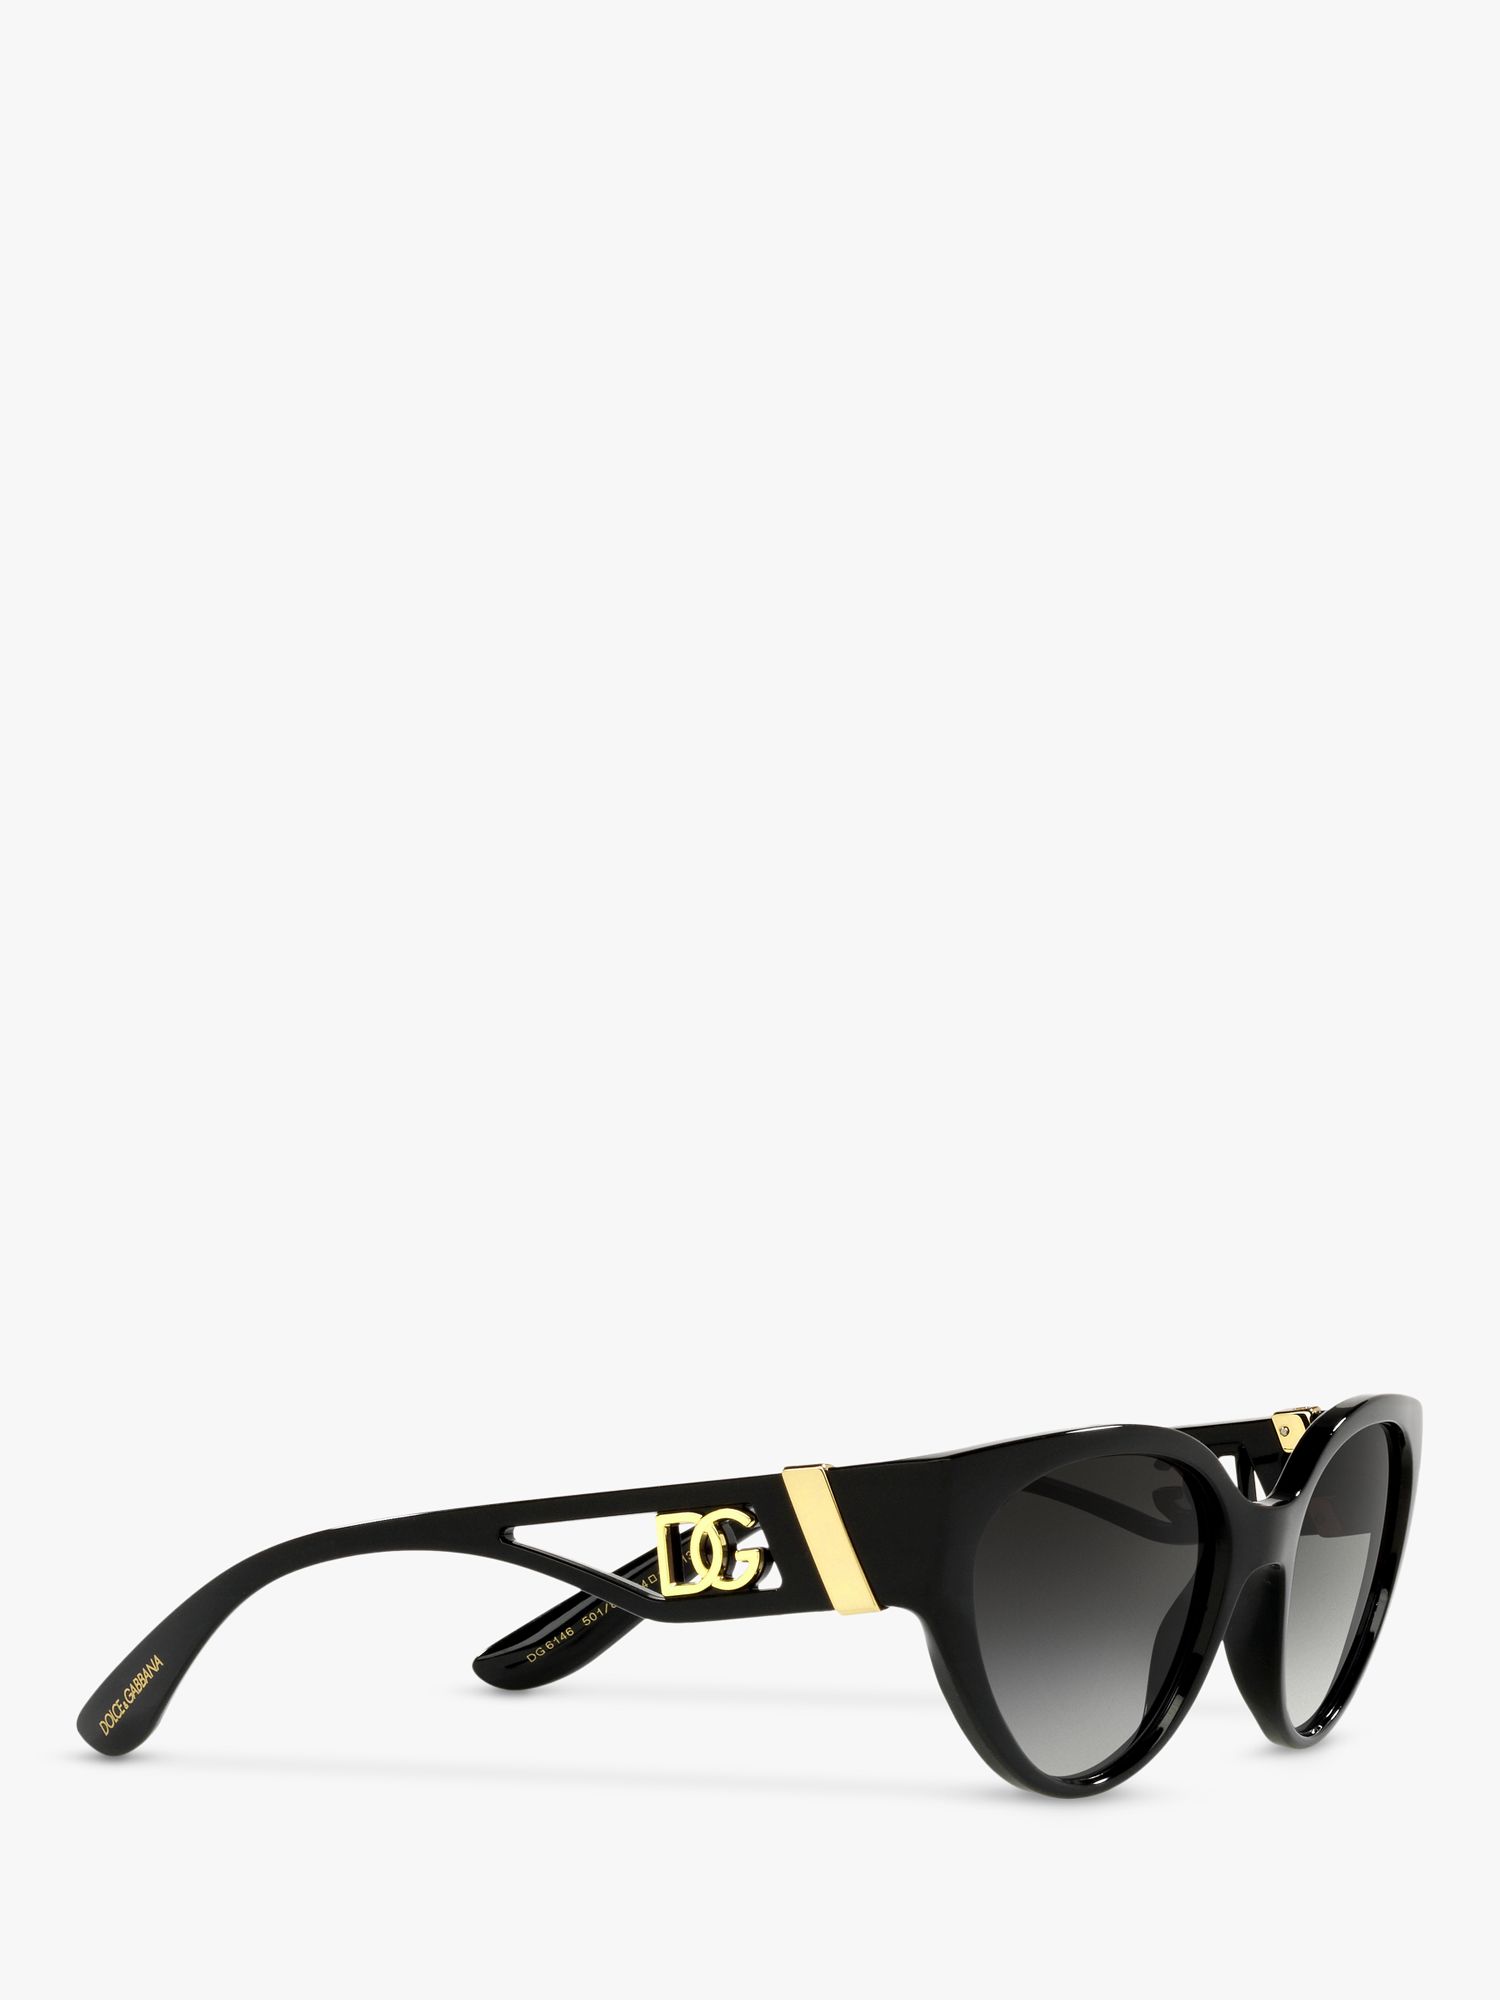 Dolce & Gabbana DG6146 Women's Cat's Eye Sunglasses, Black/Grey Gradient